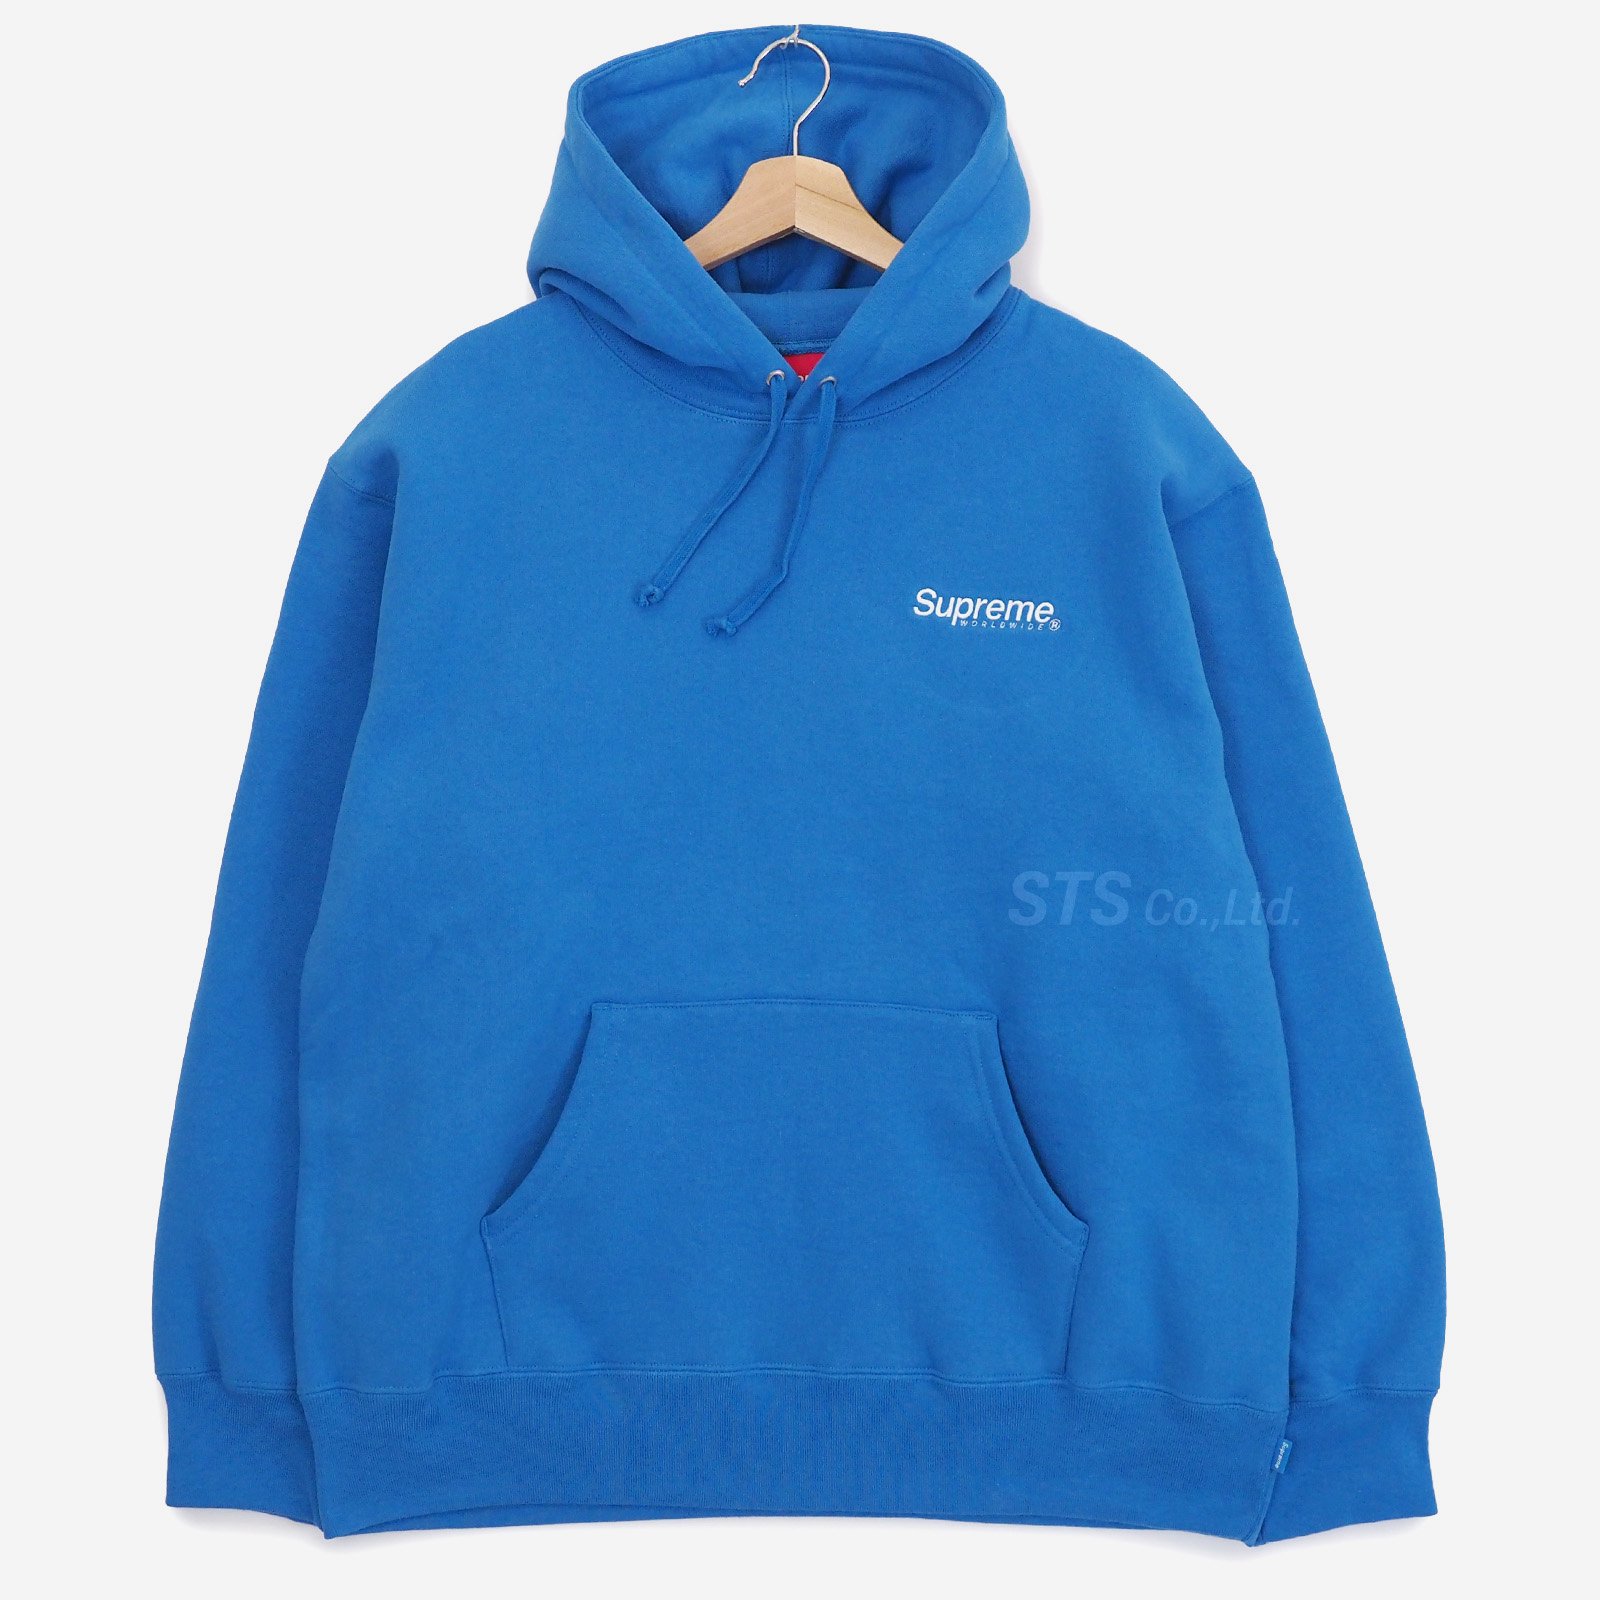 Supreme - Worldwide Hooded Sweatshirt - ParkSIDER